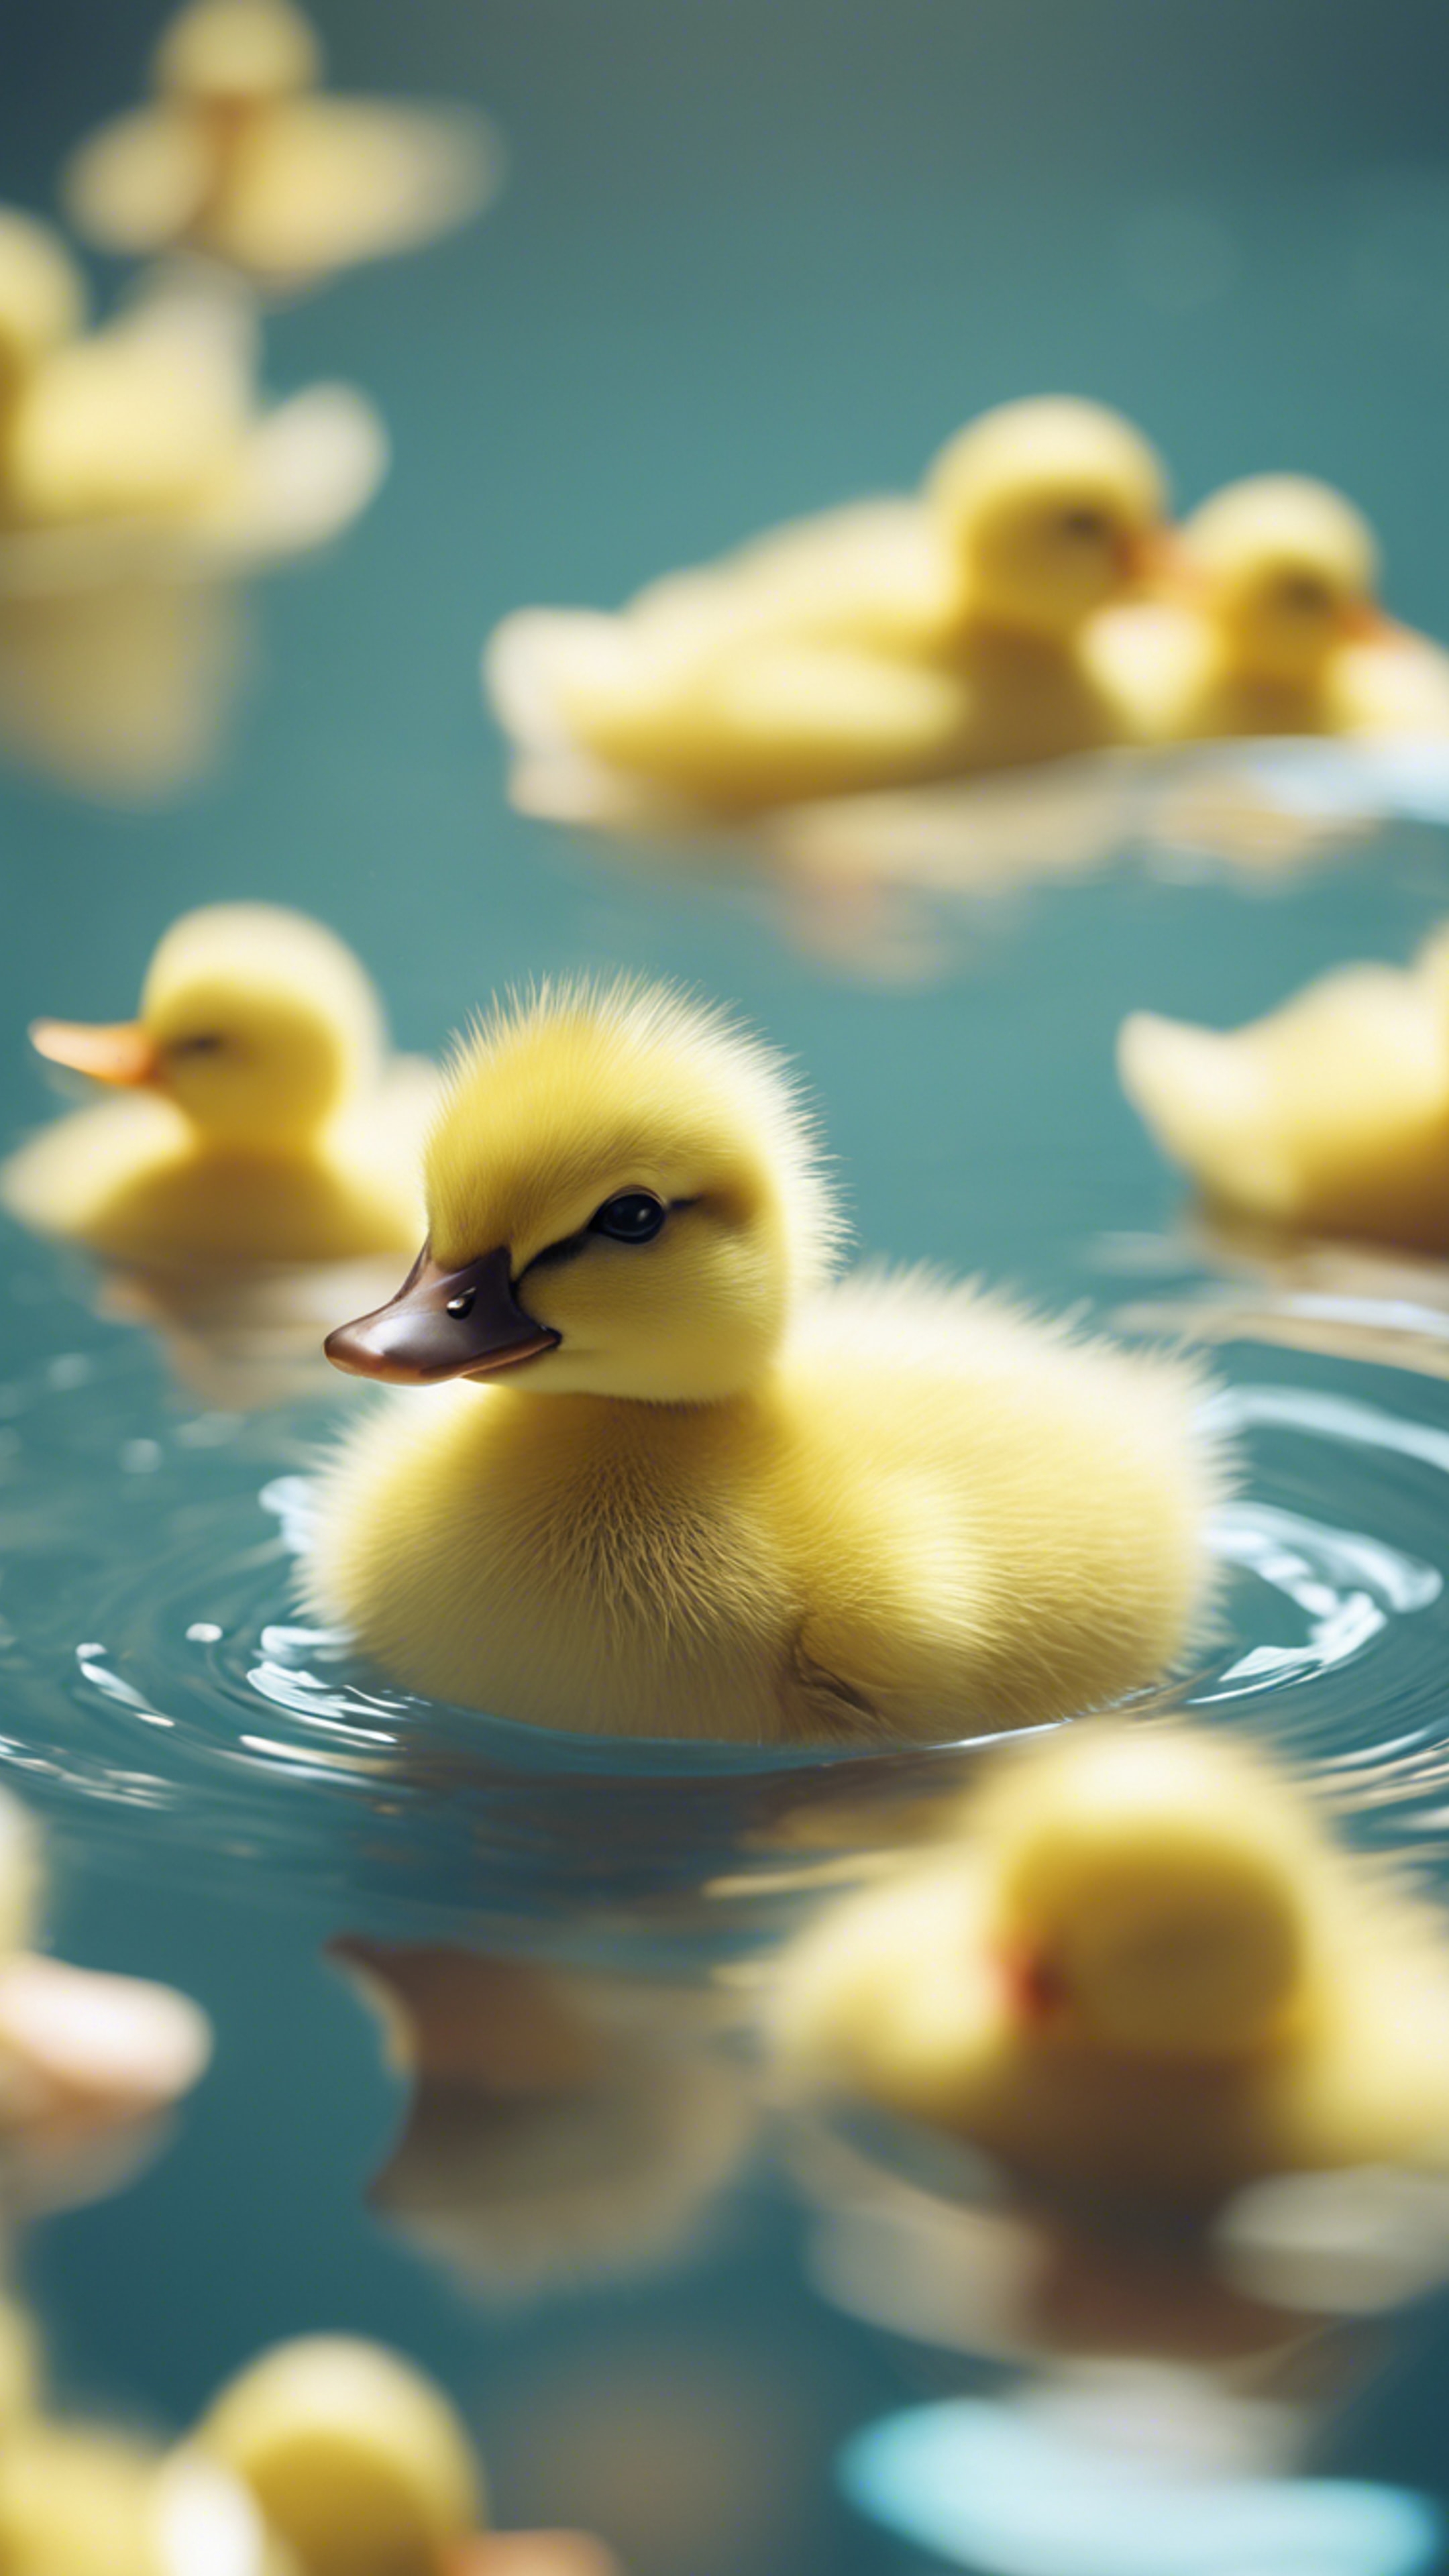 A small, chubby, kawaii yellow duckling swimming in a pastel blue pond. Tapet[2b07b187d2cc4e759cc9]